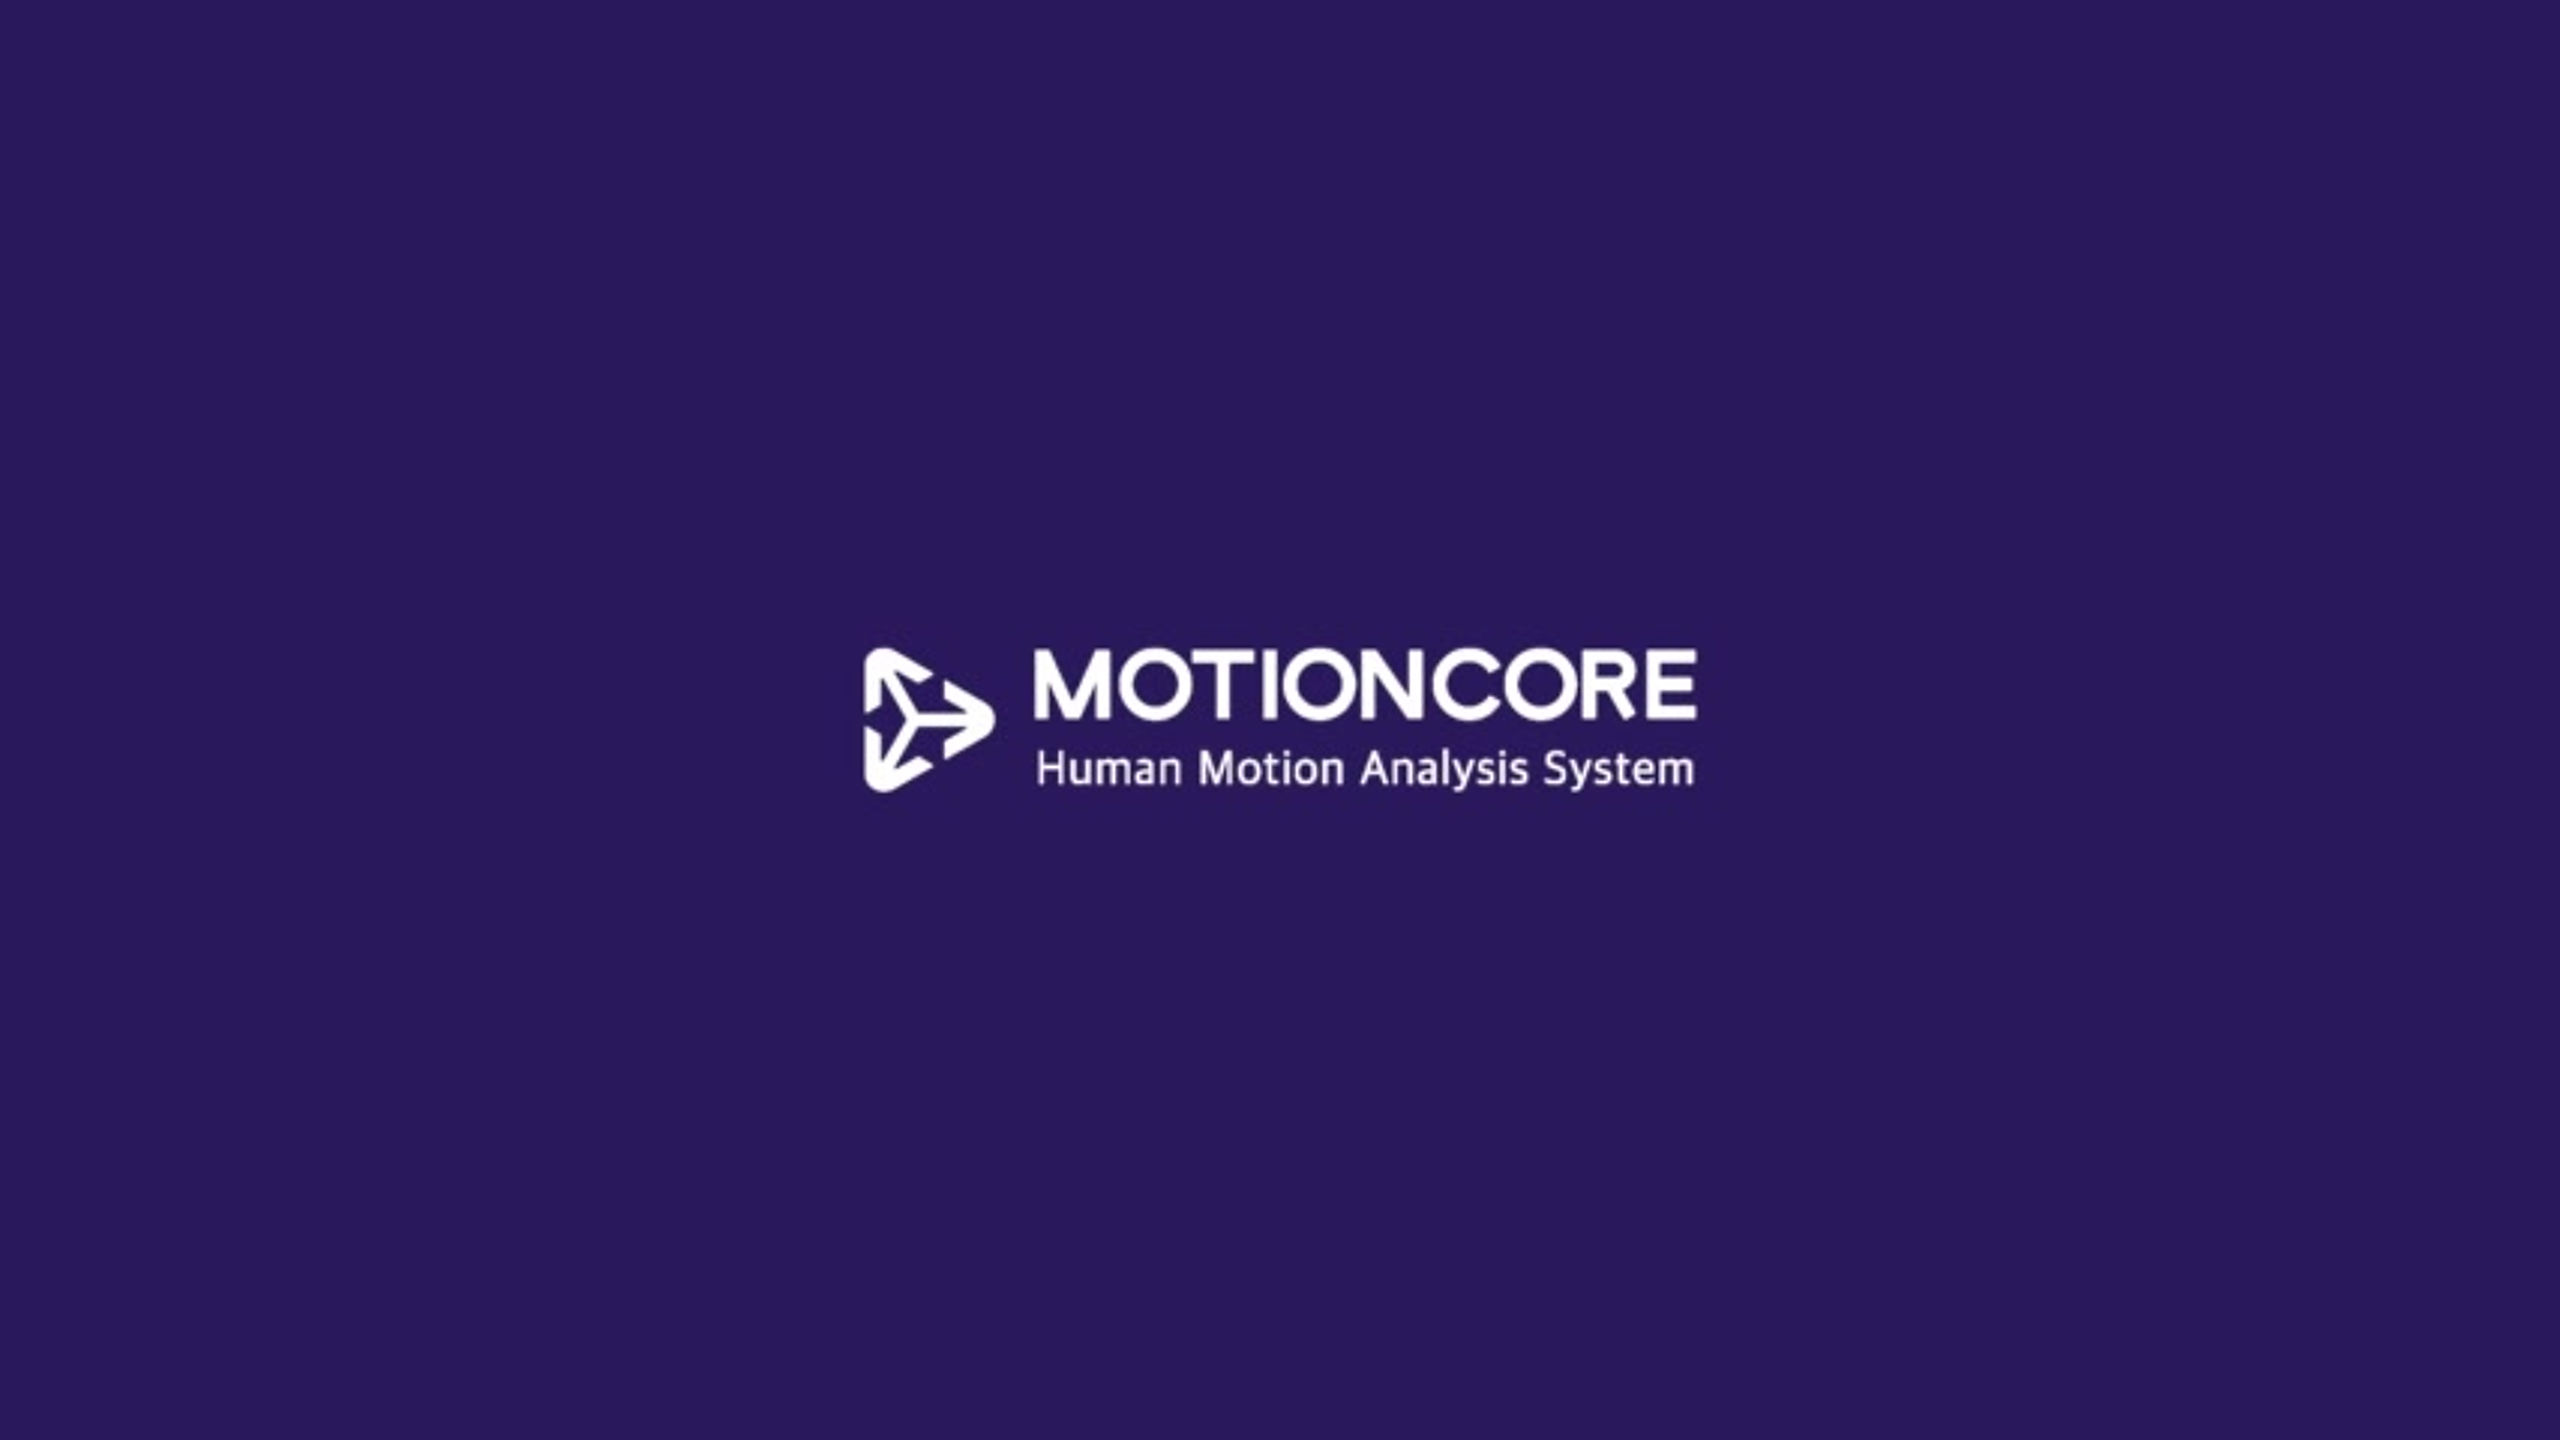 Motioncore Promotional Video 3